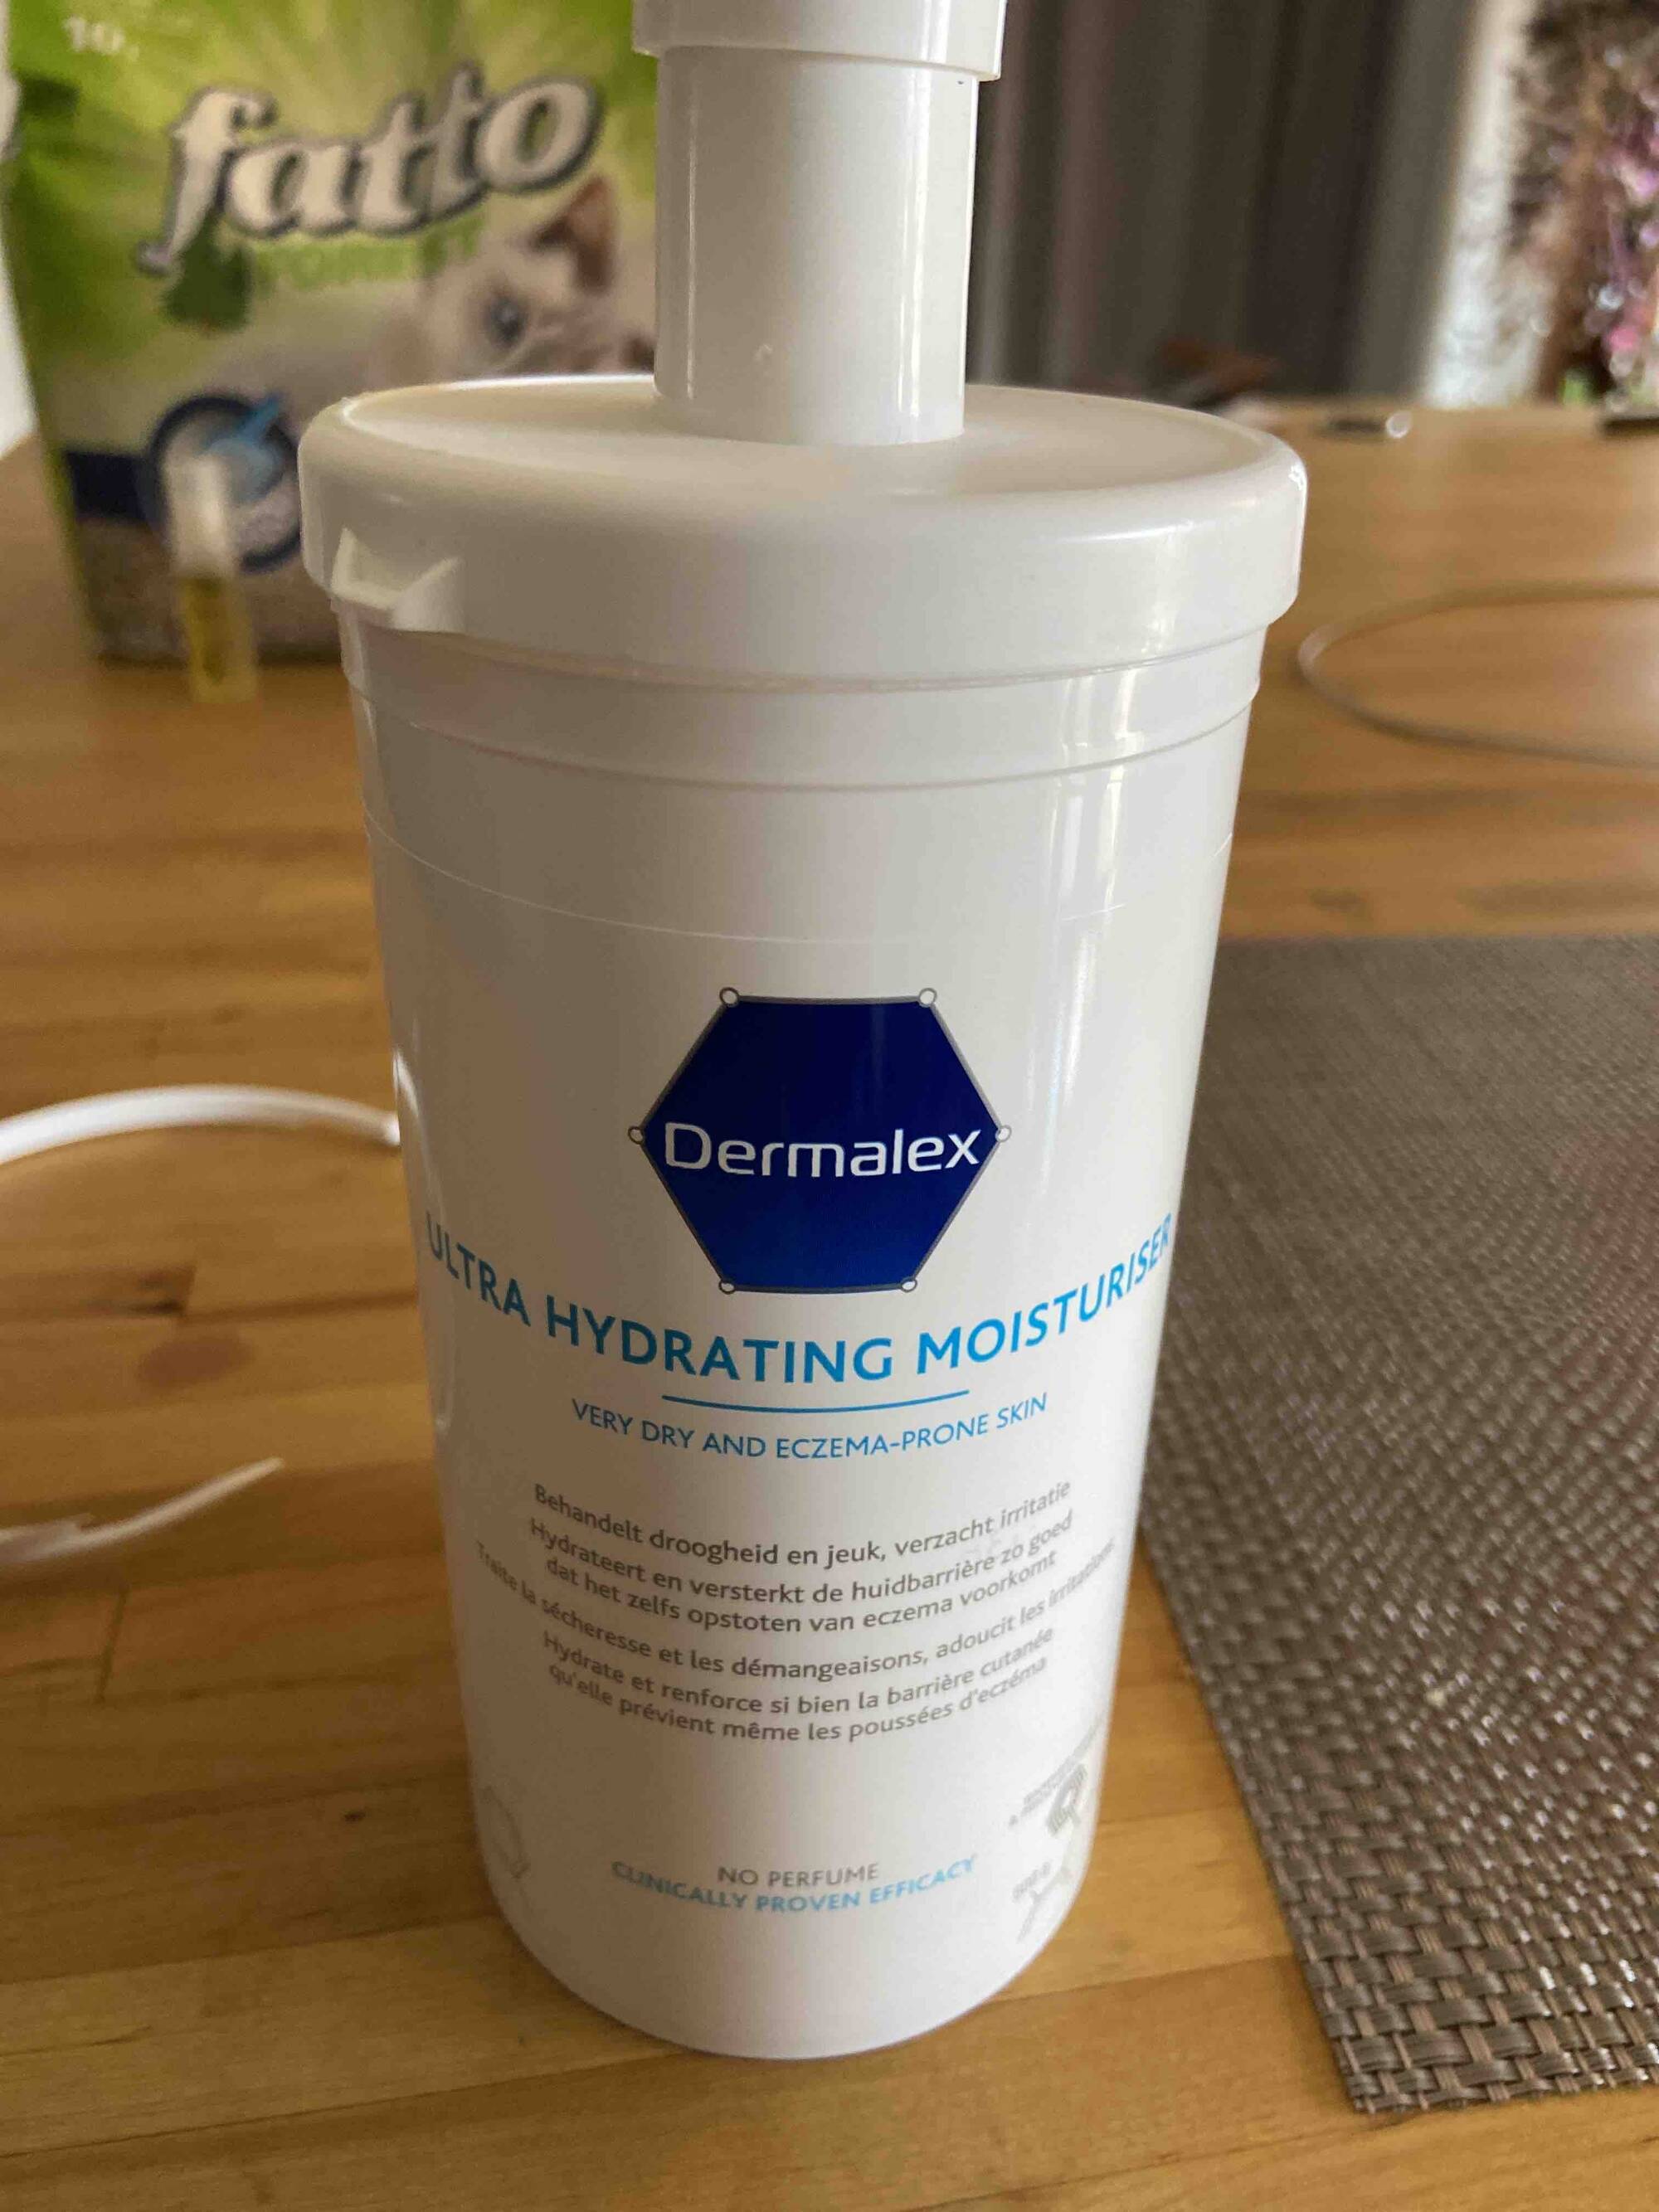 DERMALEX - Ultra hydrating moisturiser